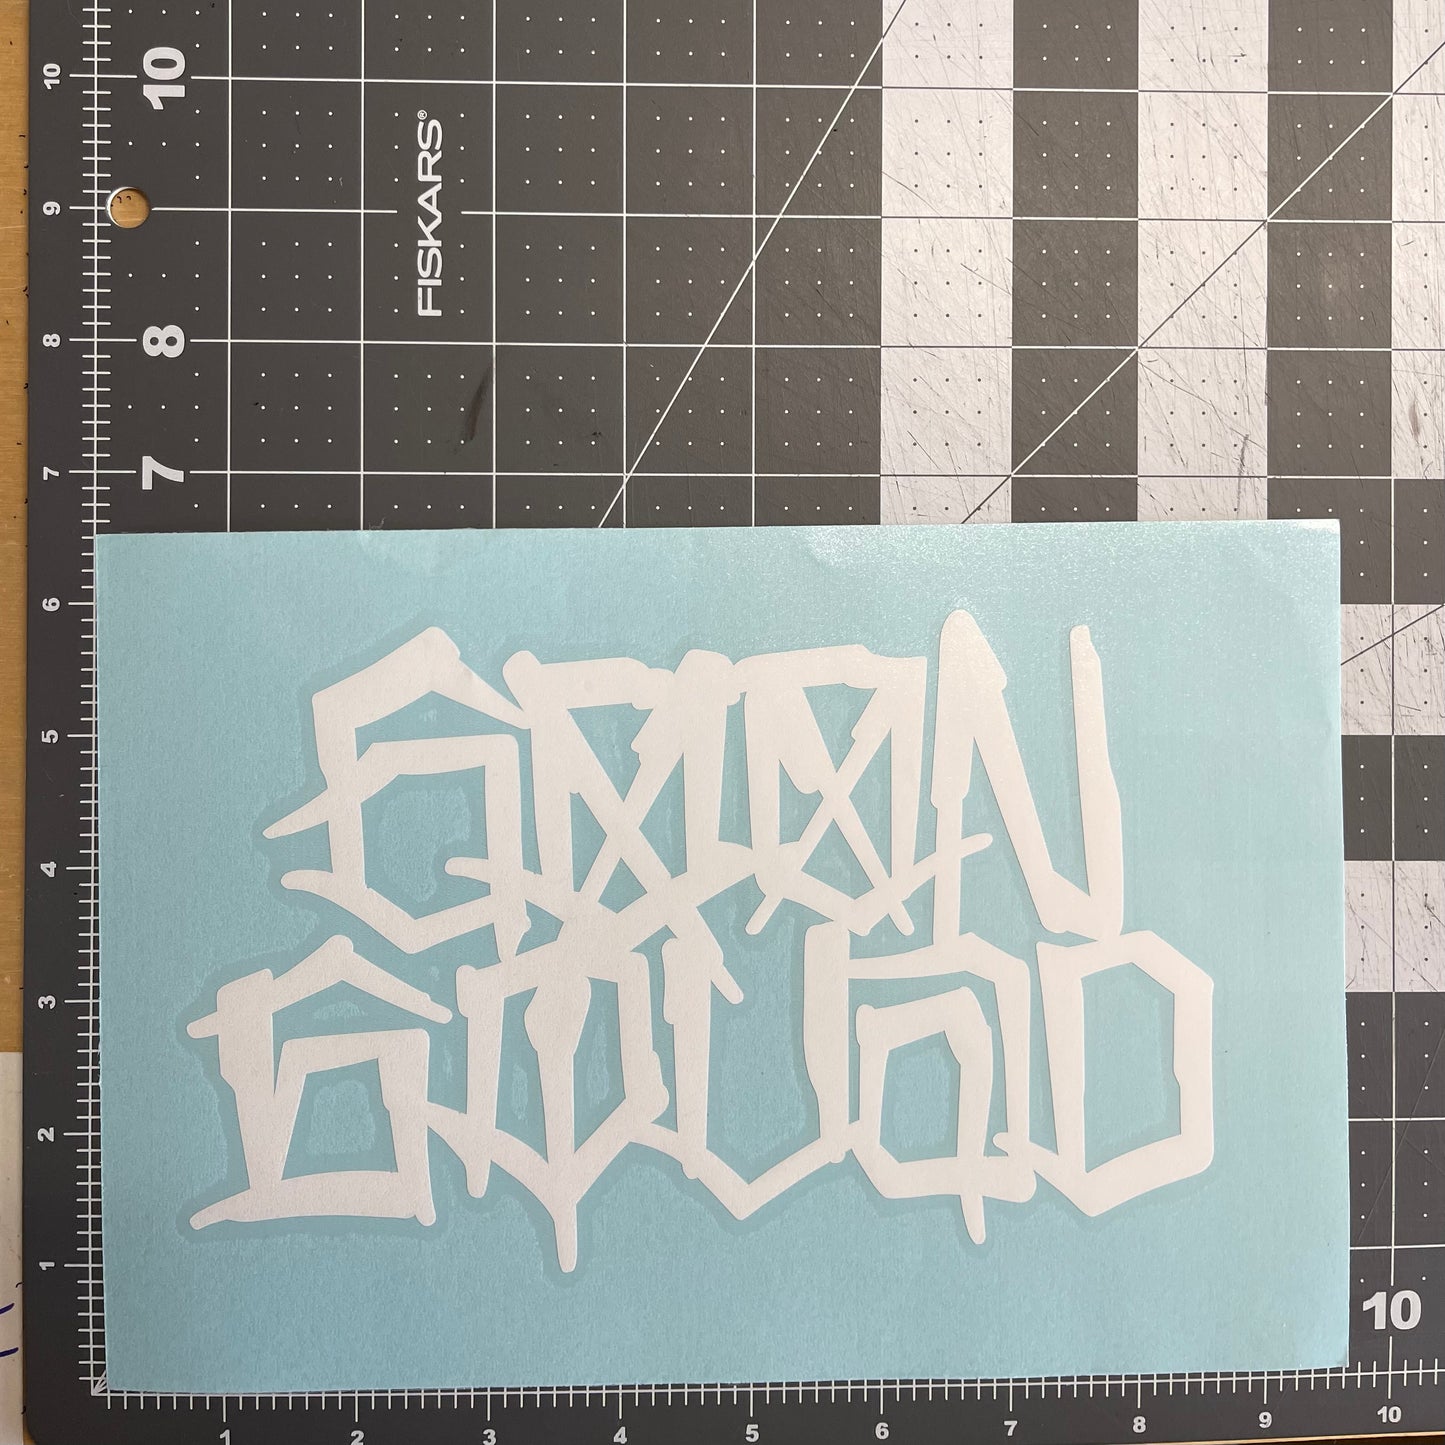 Goon Squad 8" x 5" cut vinyl logo